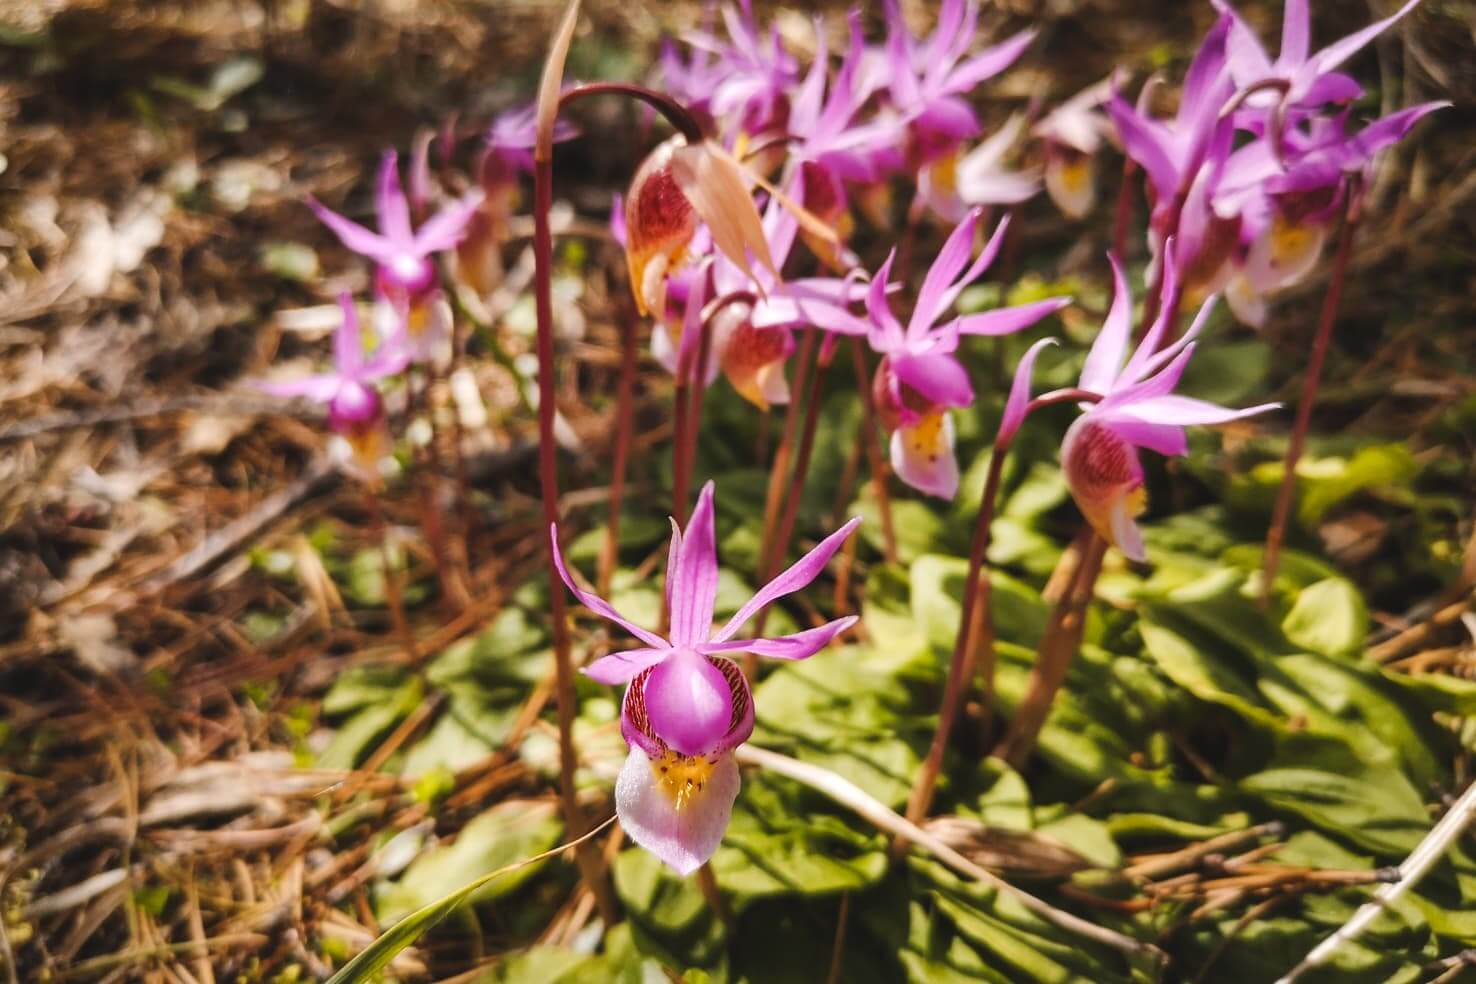 Glacier Lake, Banff National Park - Calypso orchids